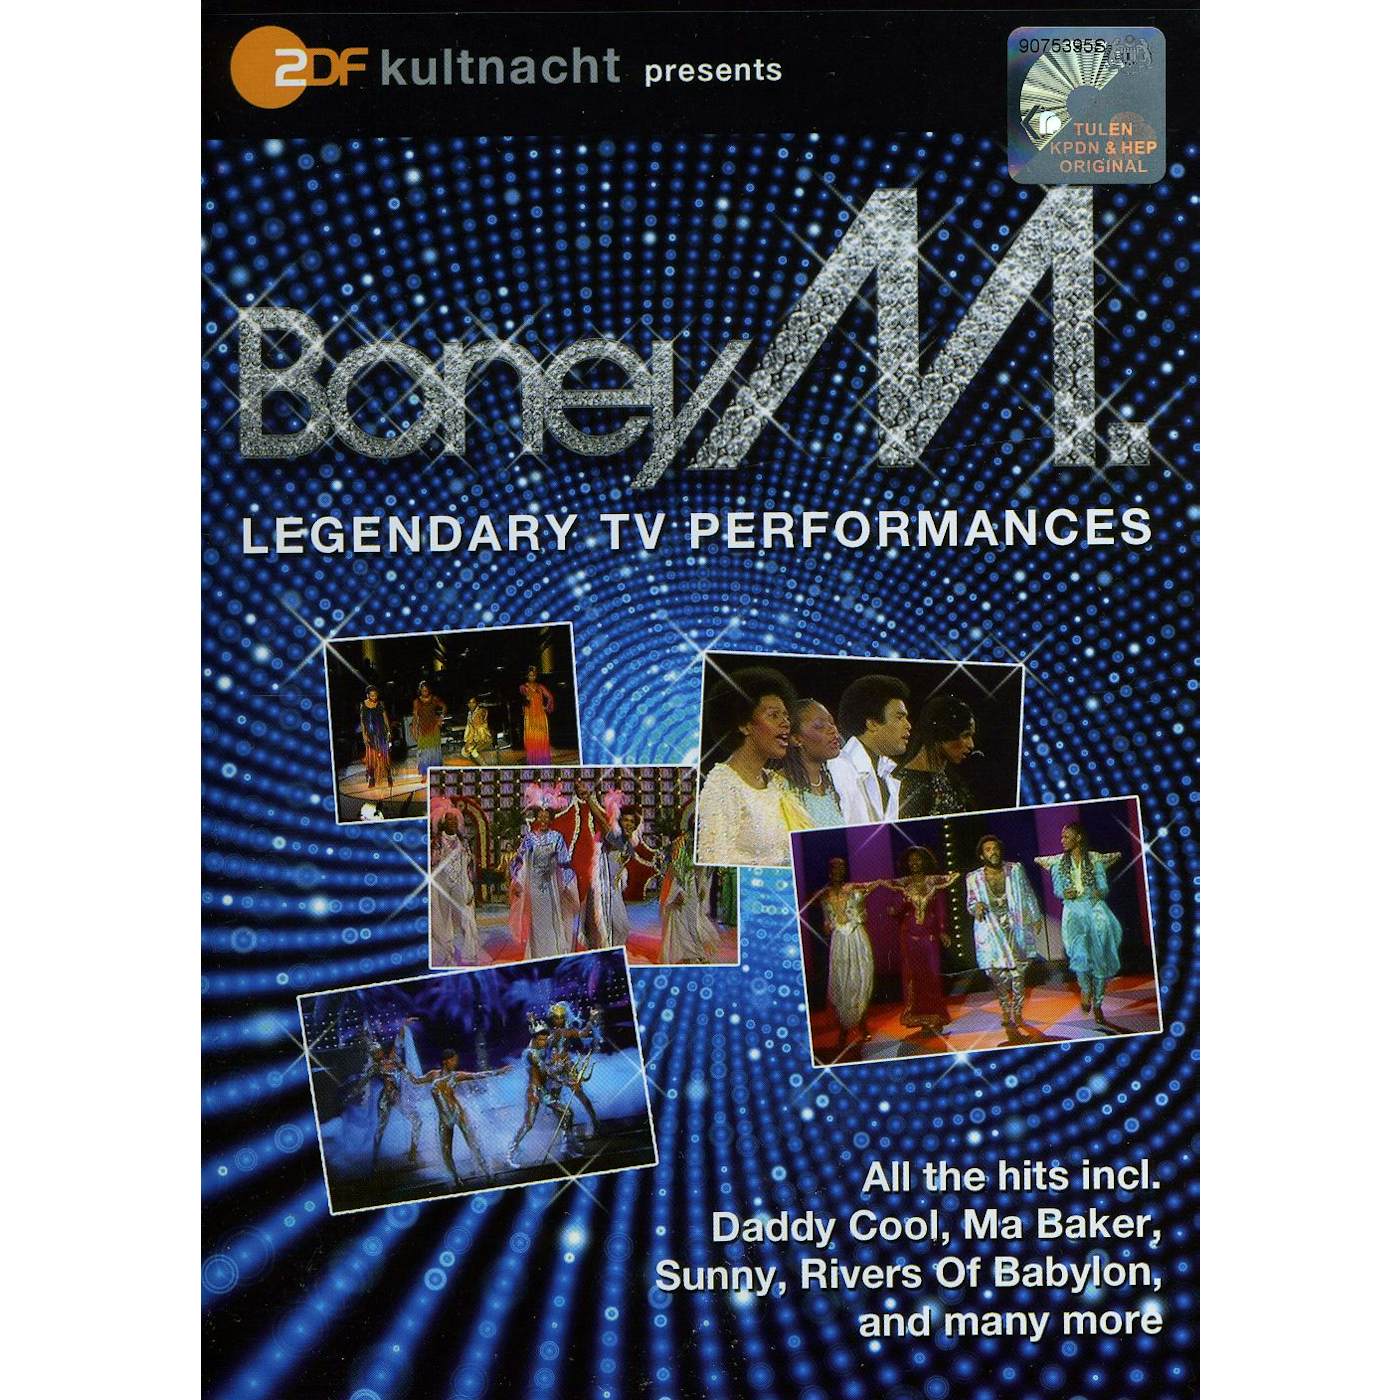 Boney M. LEGENDARY TV PERFORMANCES DVD